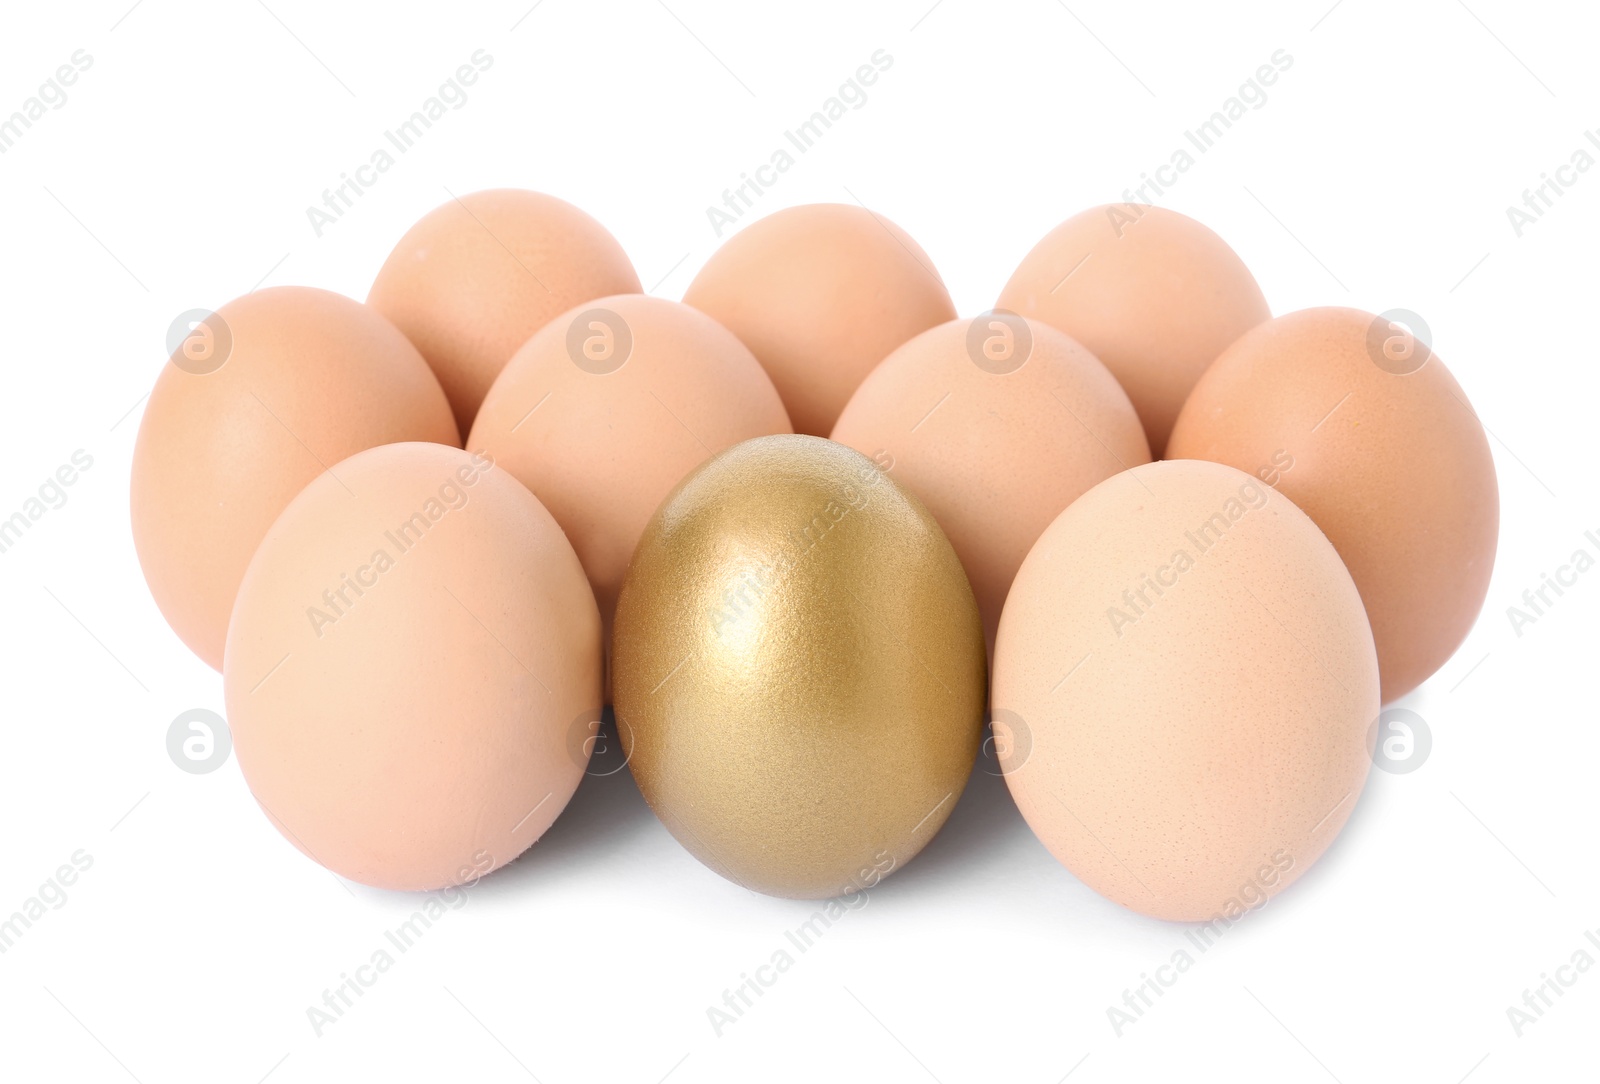 Photo of Golden egg among others on white background